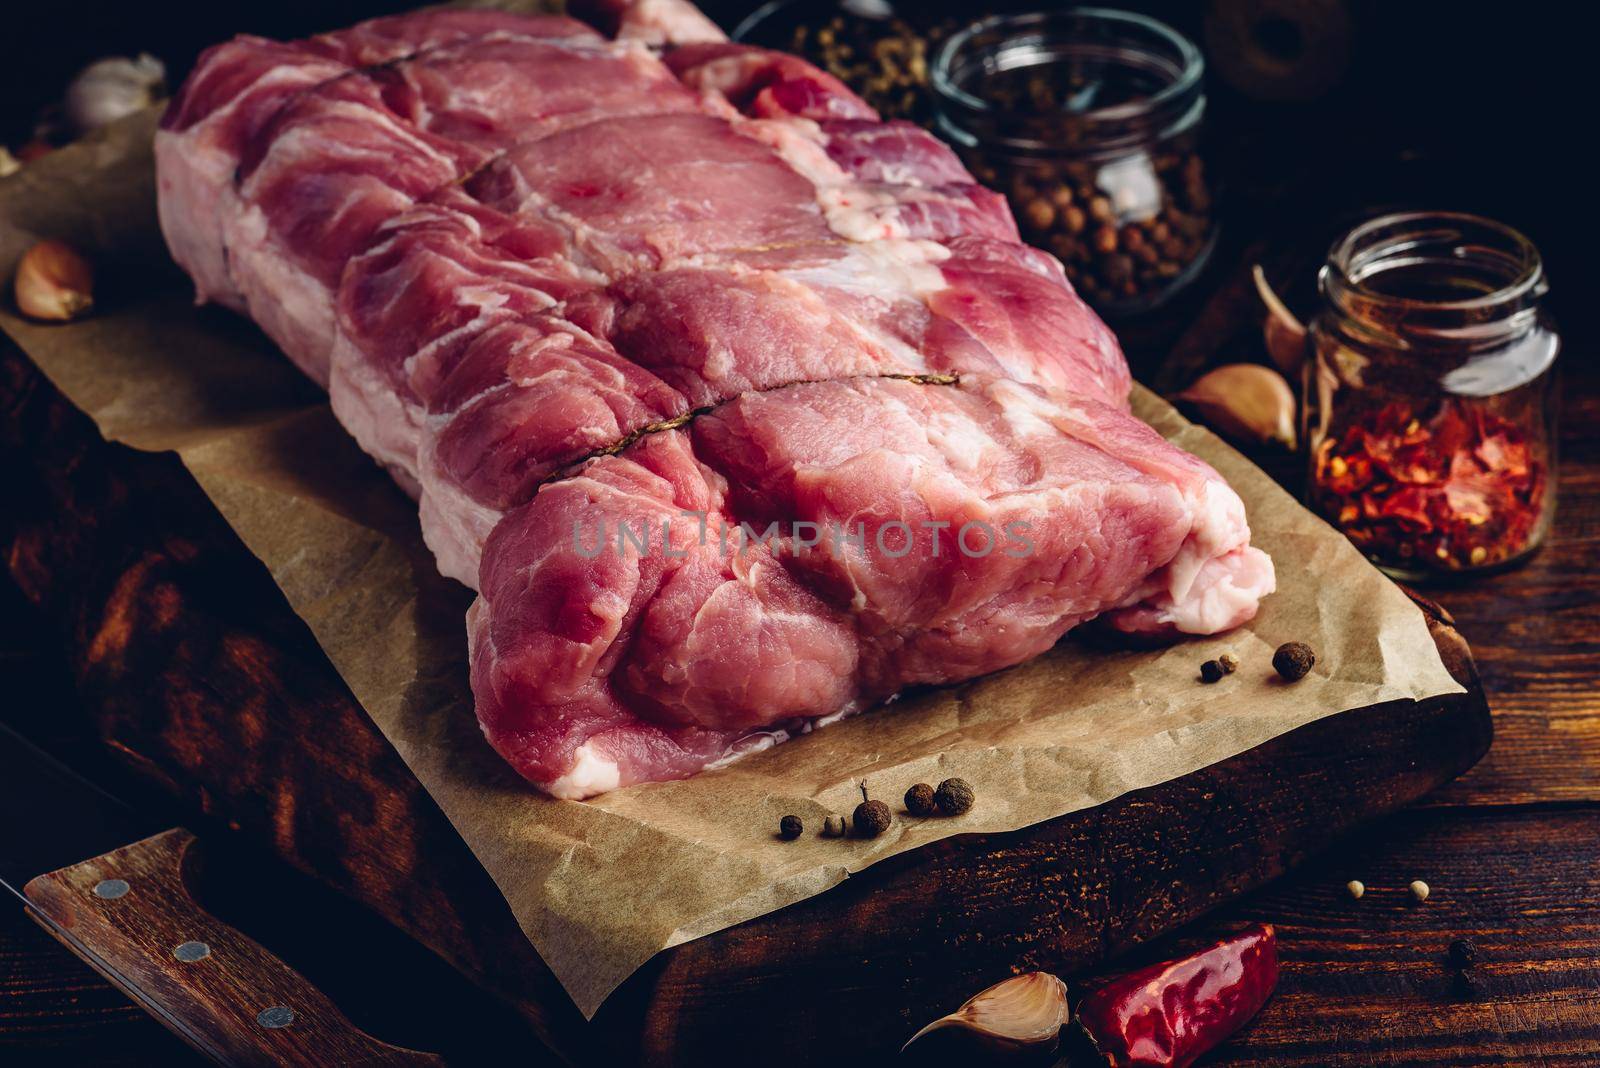 Raw pork loin joint on cutting board by Seva_blsv